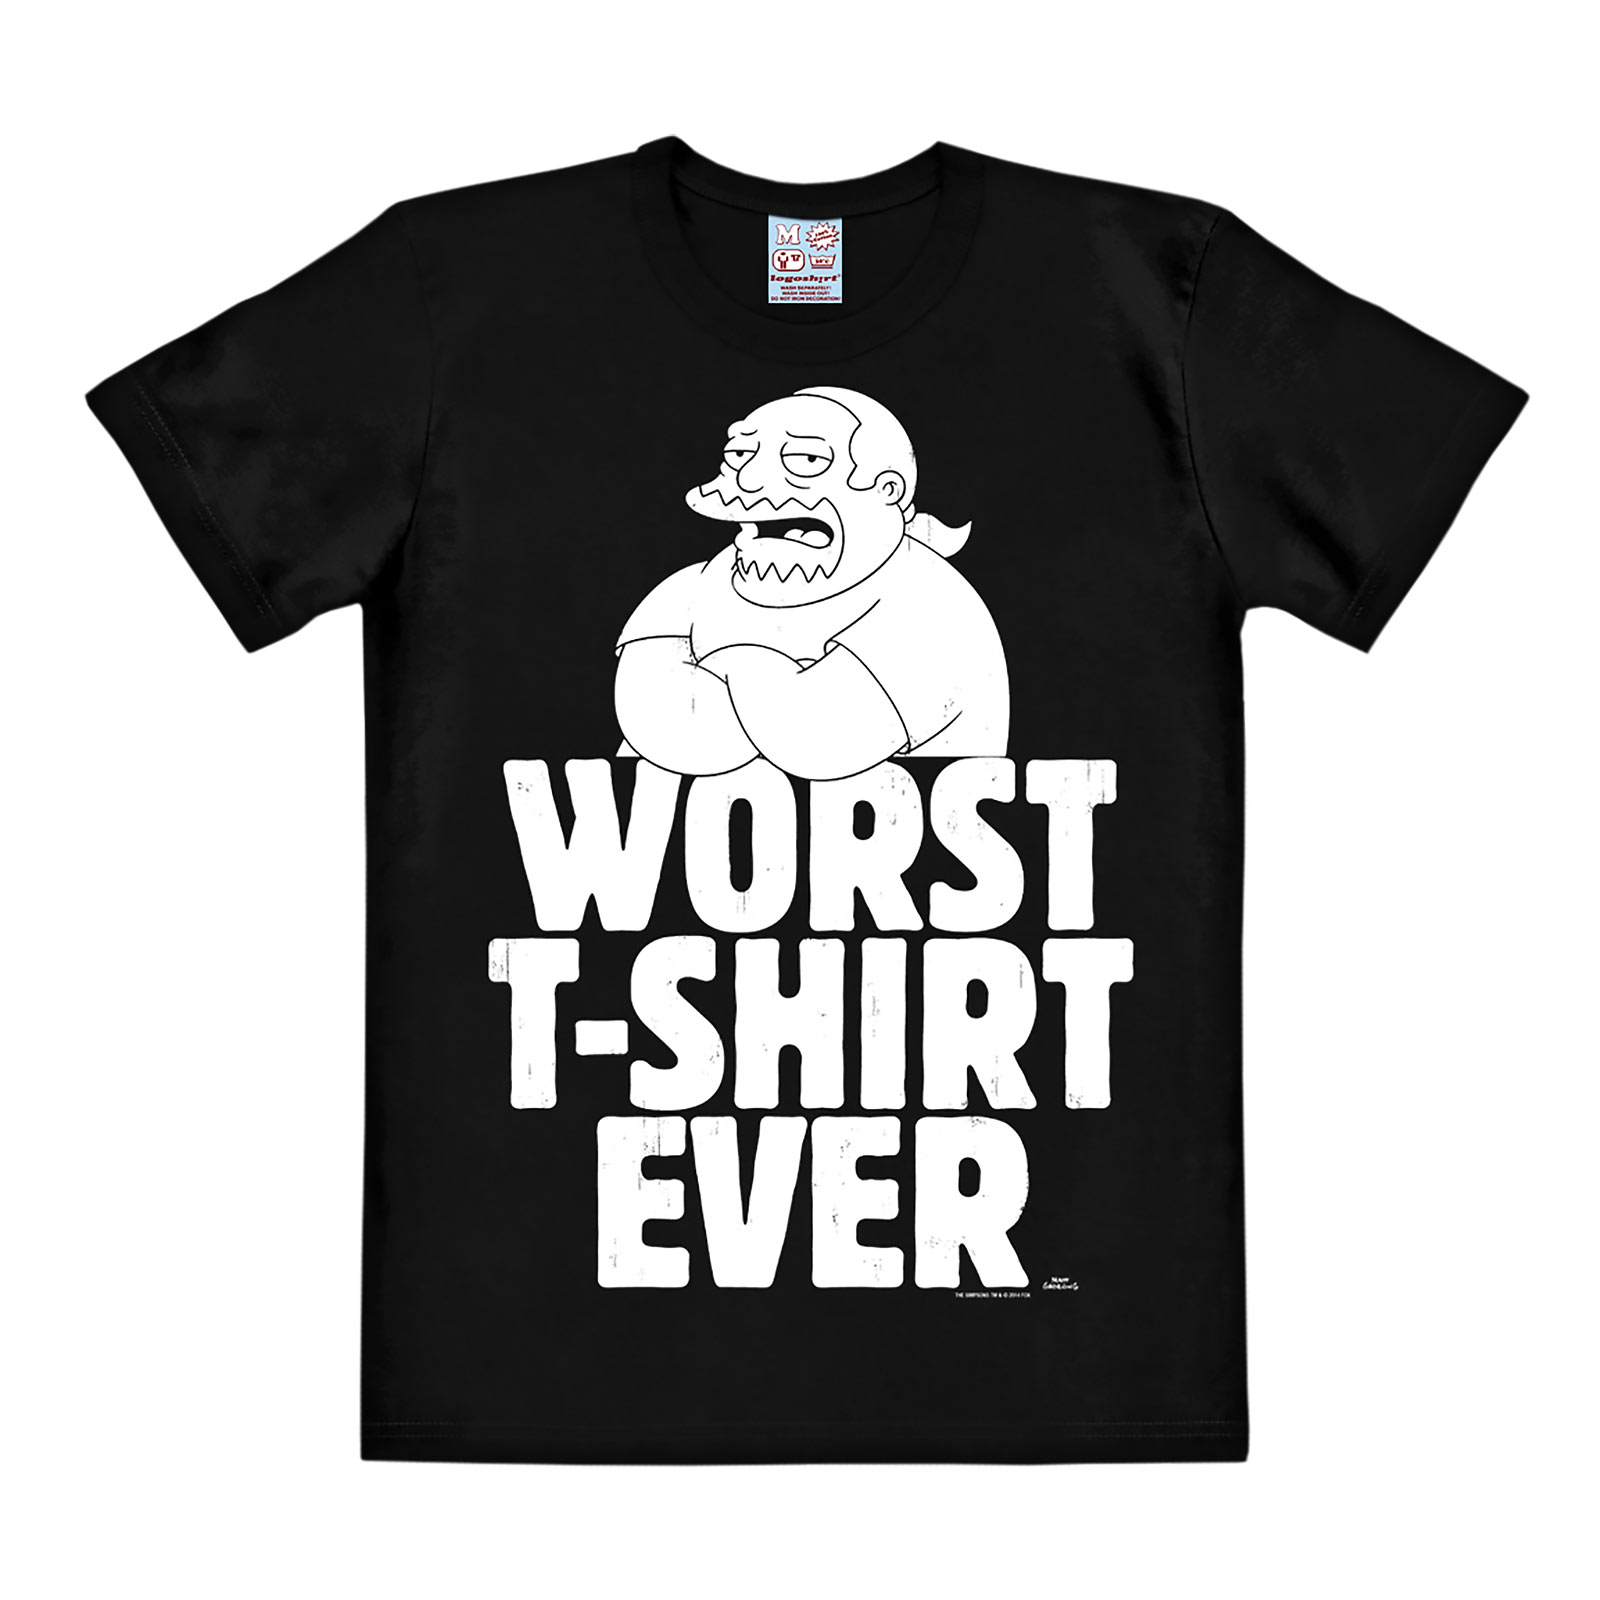 Simpsons - Worst T-Shirt Ever Black